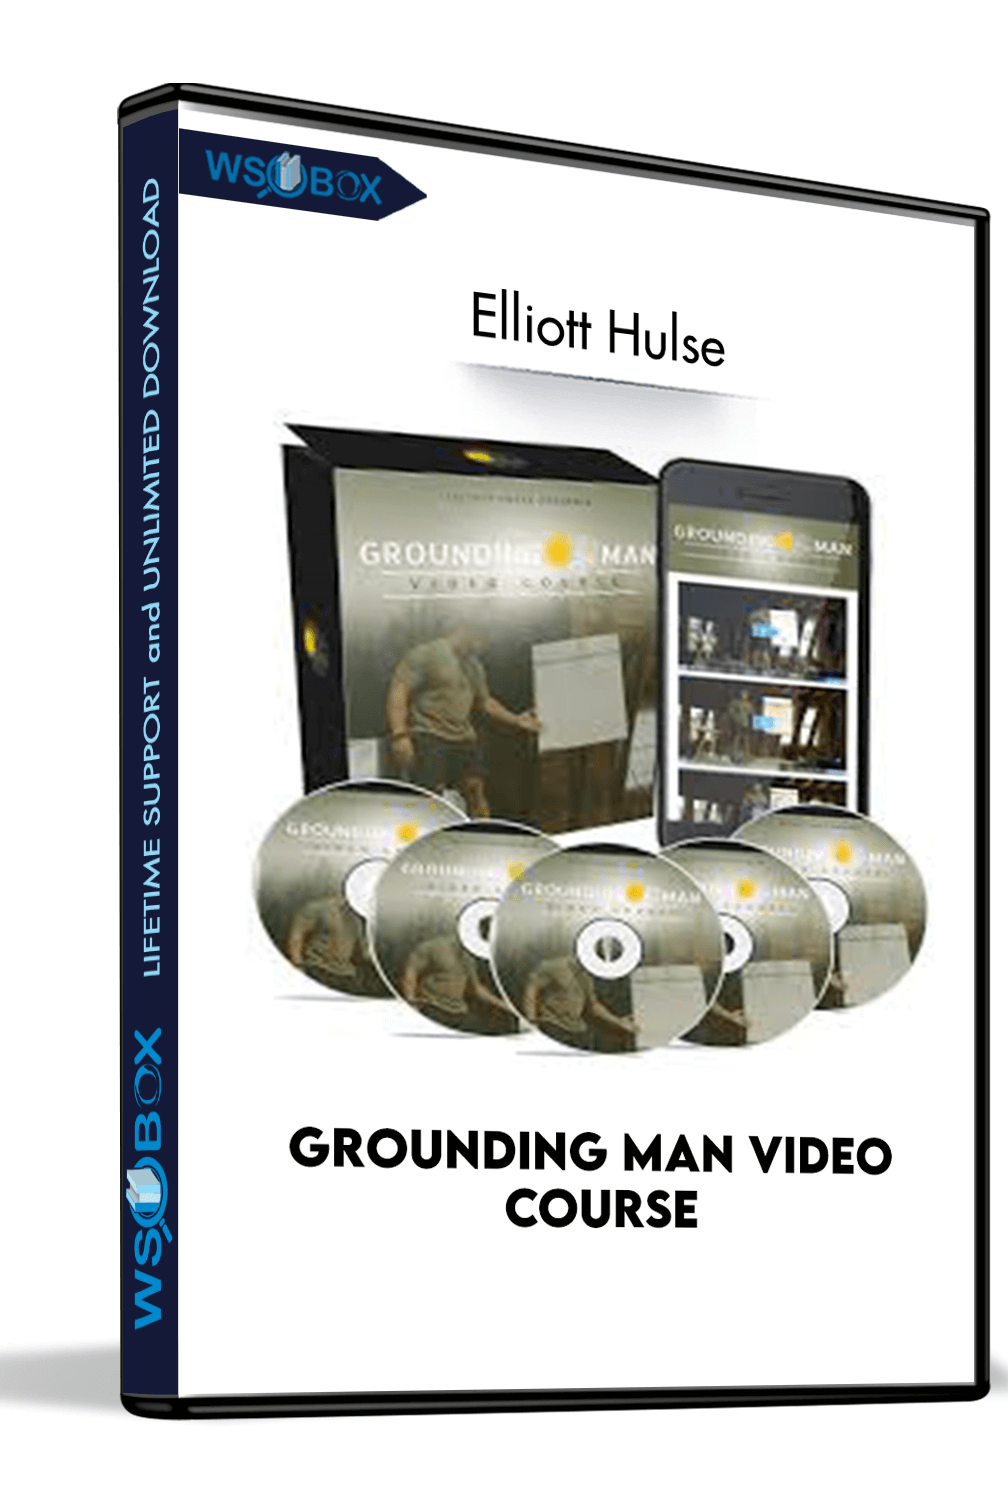 grounding-man-video-course-eliott-hulse